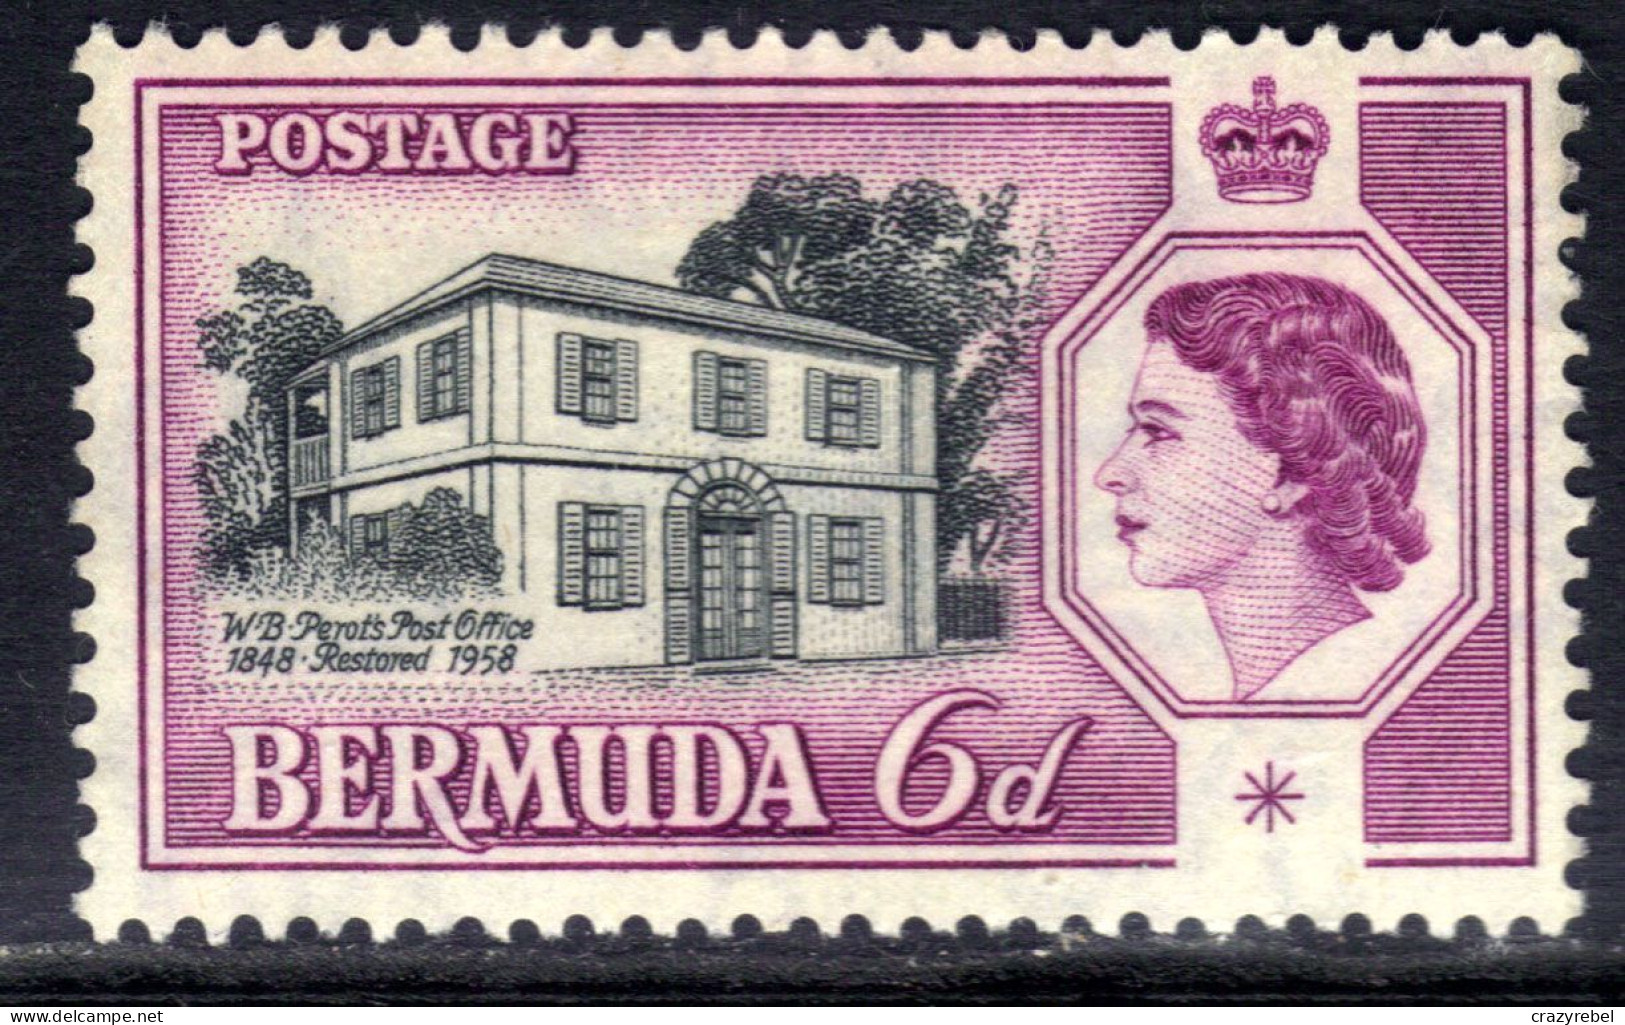 Bermuda 1959 QE2 6d Perots Post Office MNG SG 156 ( L207 ) - Bermuda